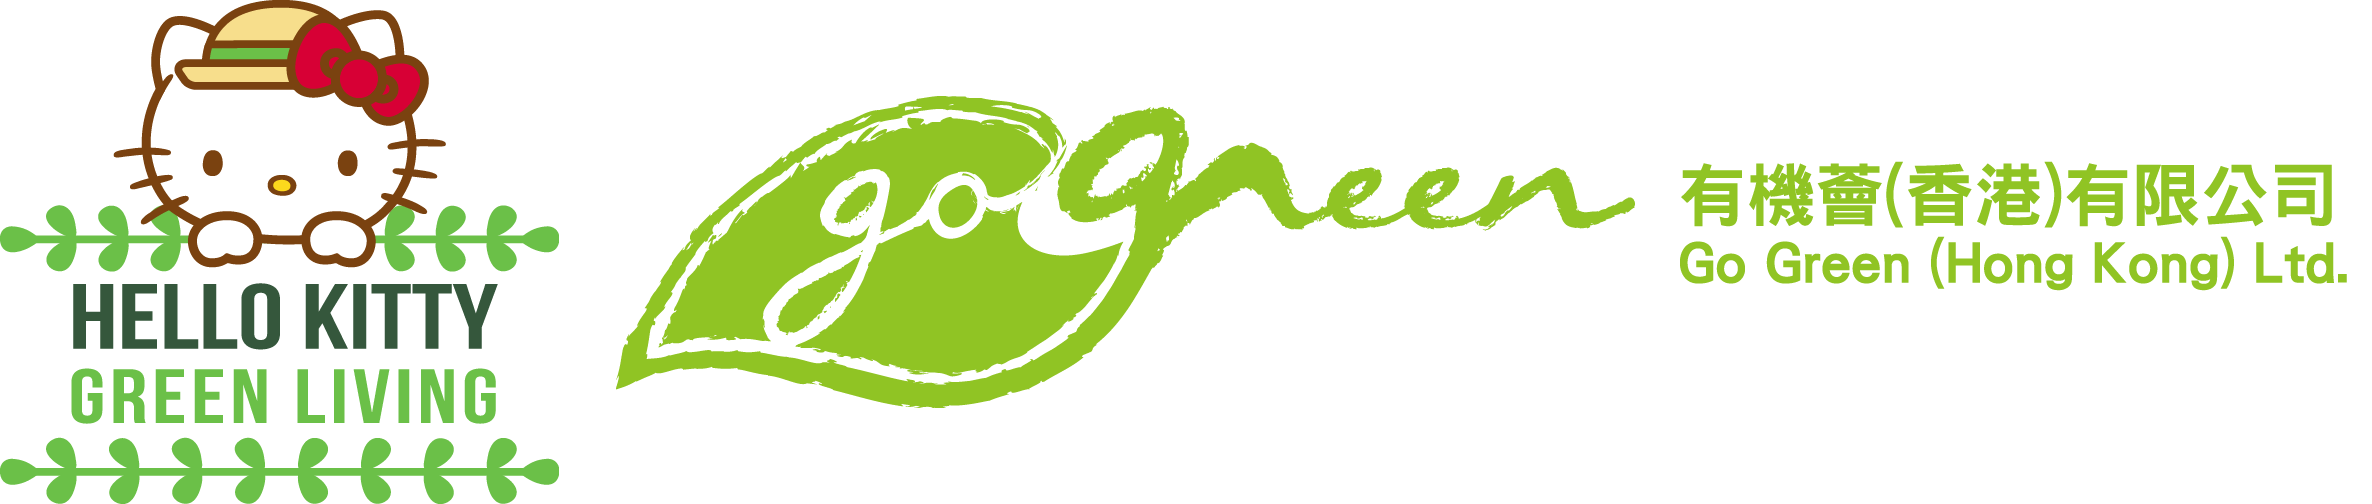 food scheme 2016 silver GreenLiving